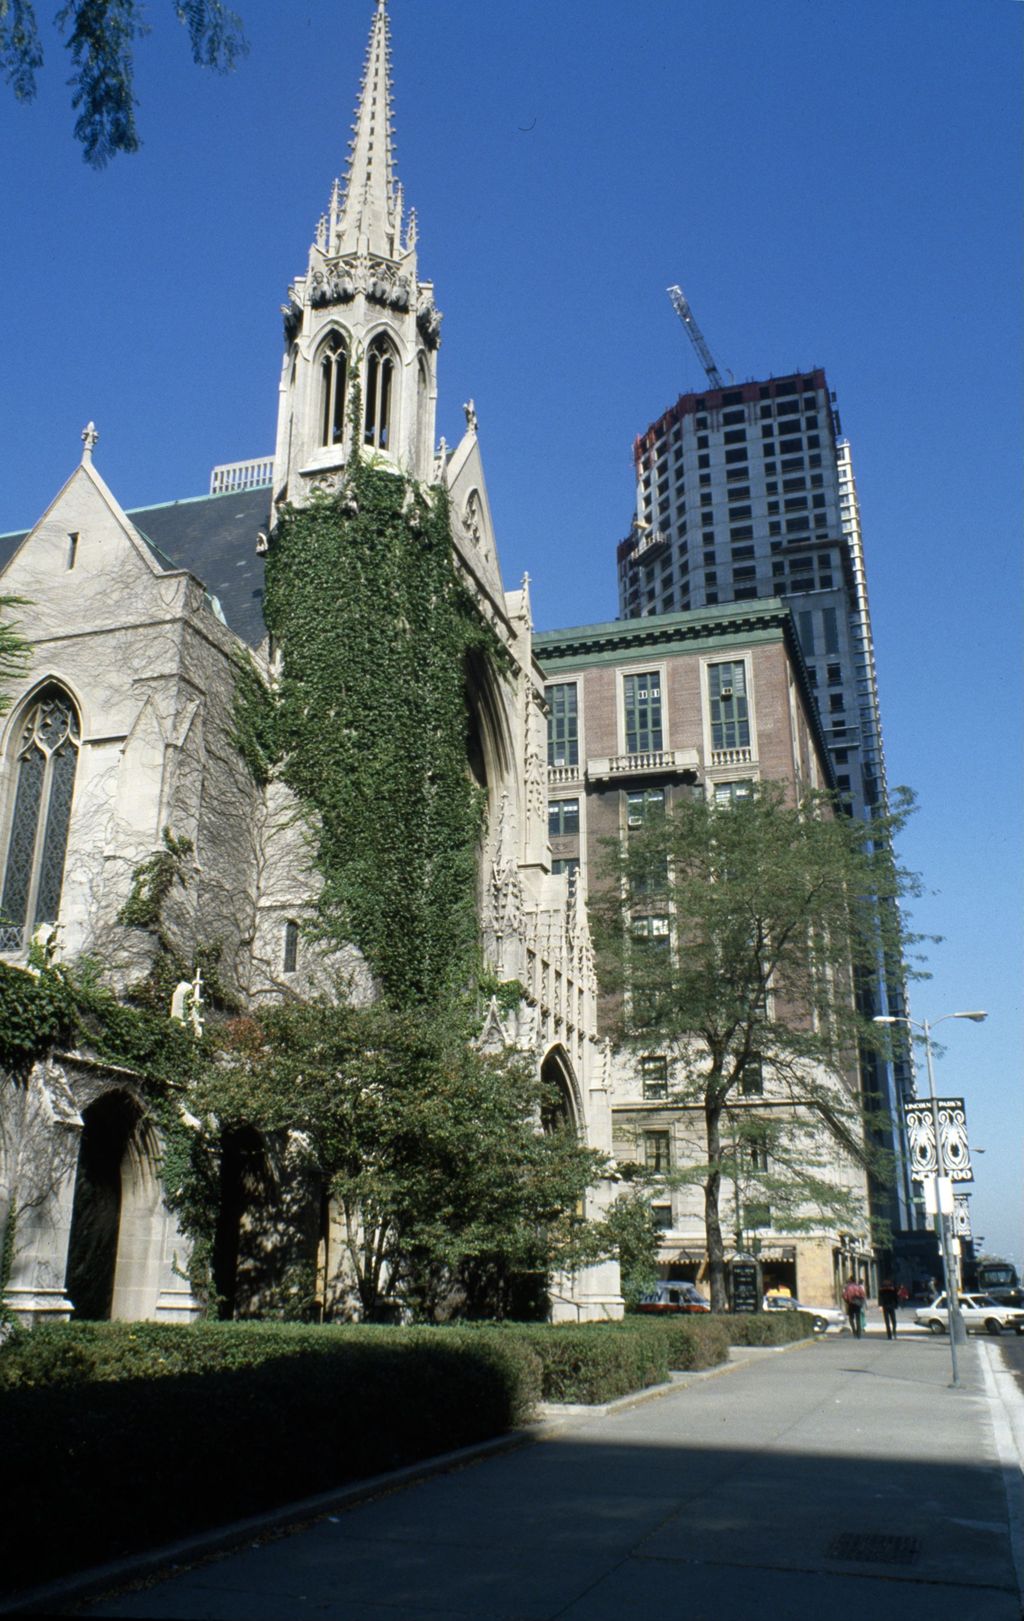 Miniature of Fourth Presbyterian Church and North Michigan Avenue buildings